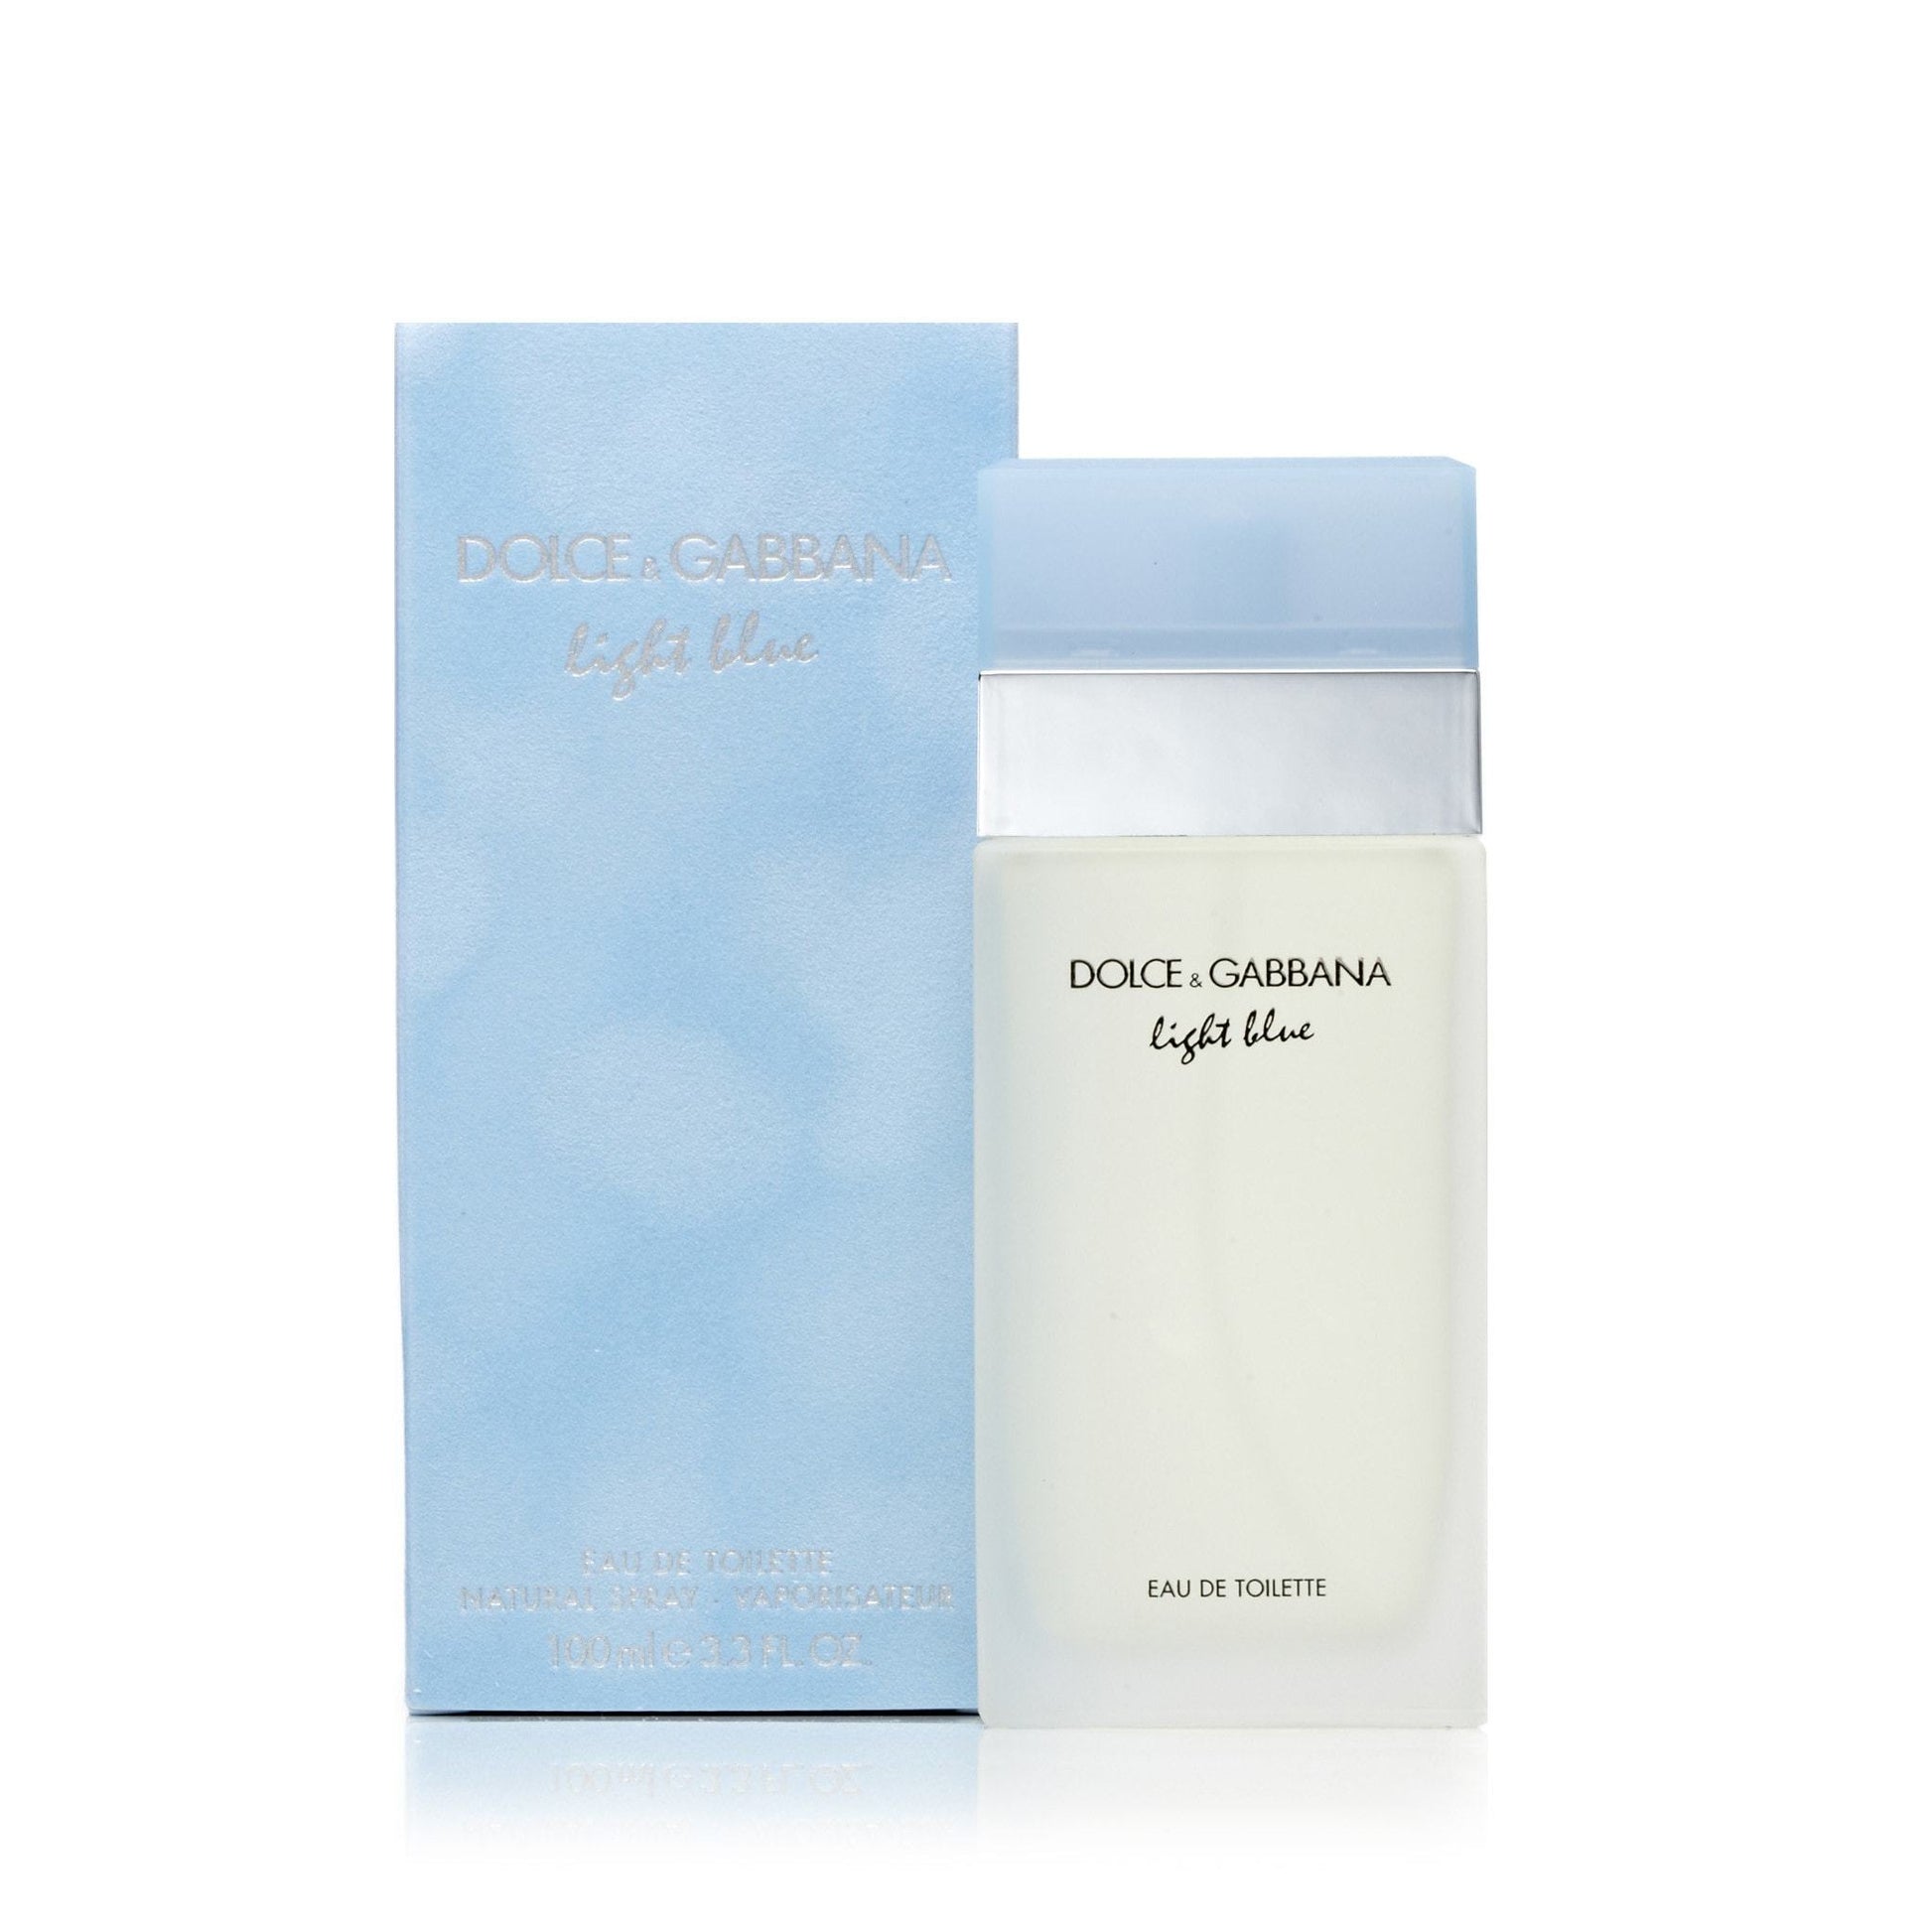 Dolce & Gabbana Light Blue for Women 0.84 oz Eau de Toilette Spray